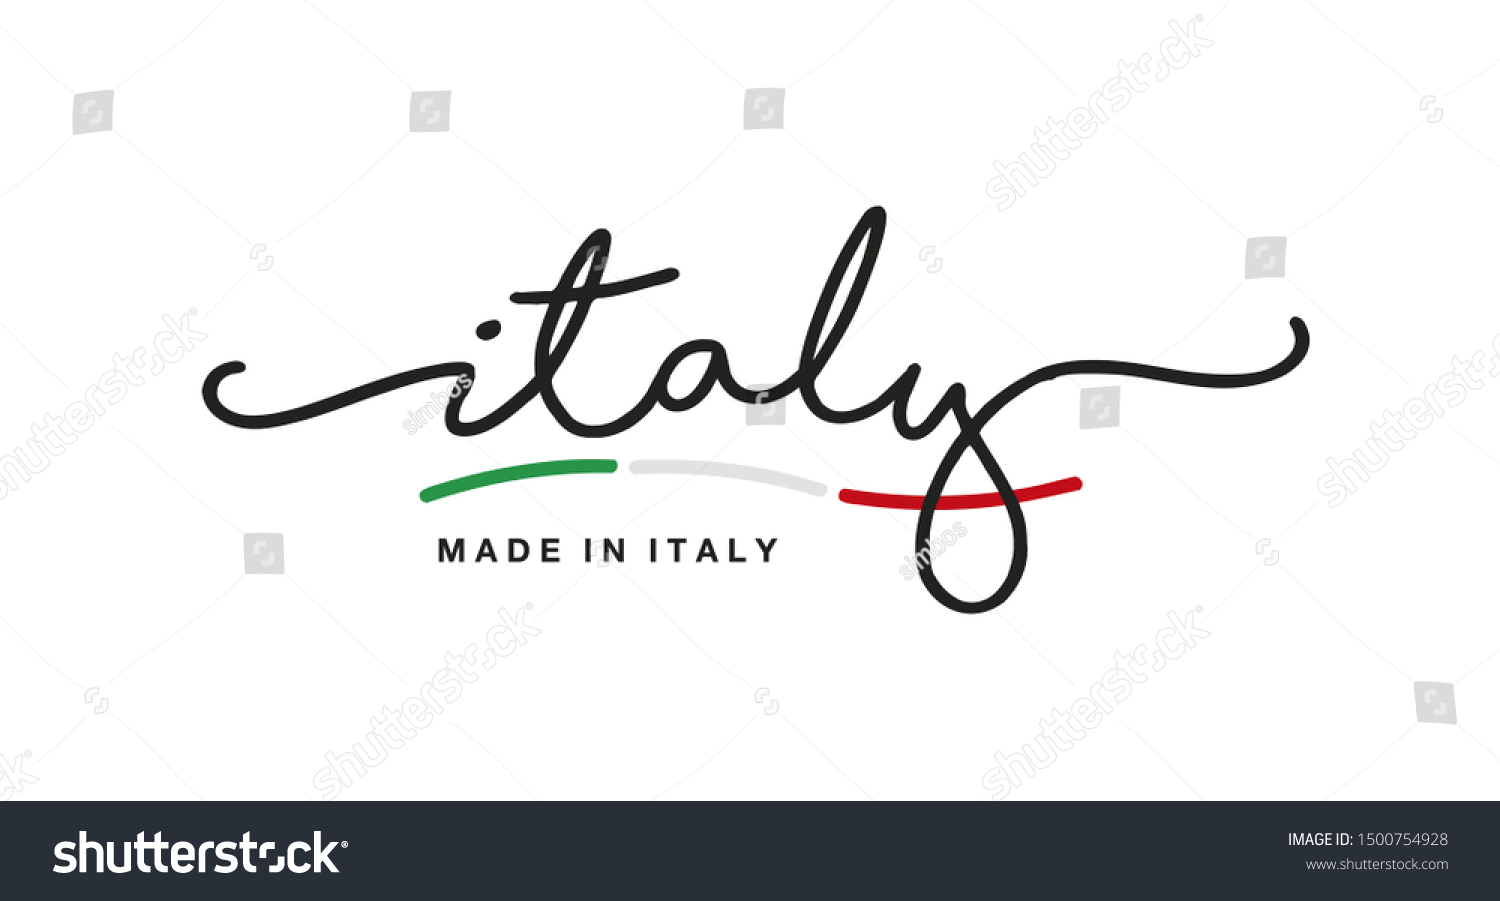 Made in Italy handwritten calligraphic lettering logo sticker green white red flag ribbon banner line design #1500754928